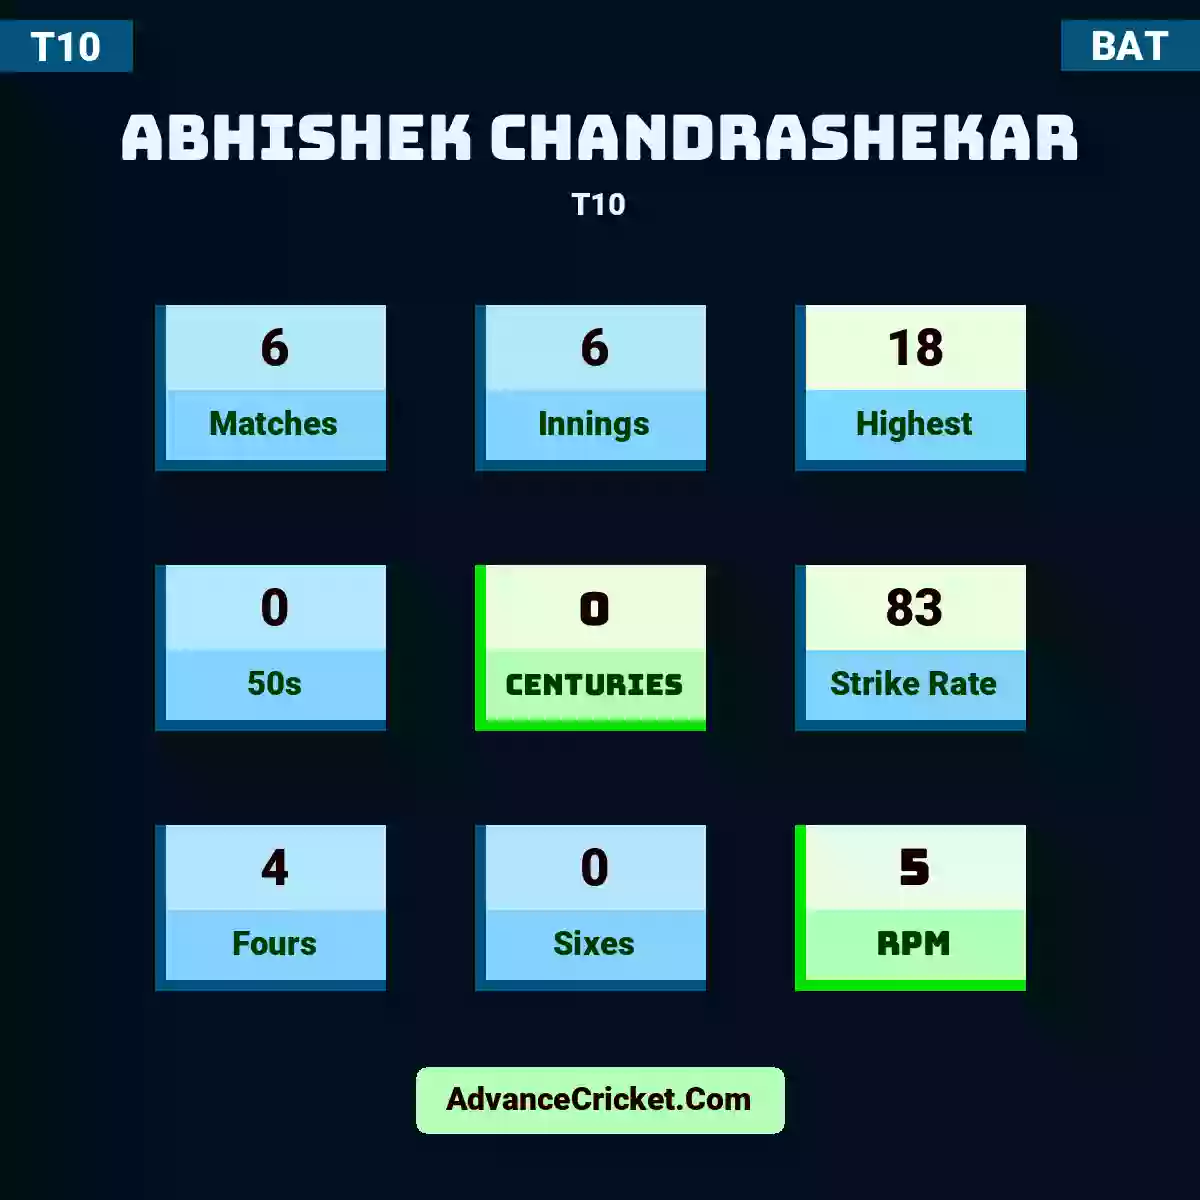 Abhishek Chandrashekar T10 , Abhishek Chandrashekar played 6 matches, scored 18 runs as highest, 0 half-centuries, and 0 centuries, with a strike rate of 83. A.Chandrashekar hit 4 fours and 0 sixes, with an RPM of 5.